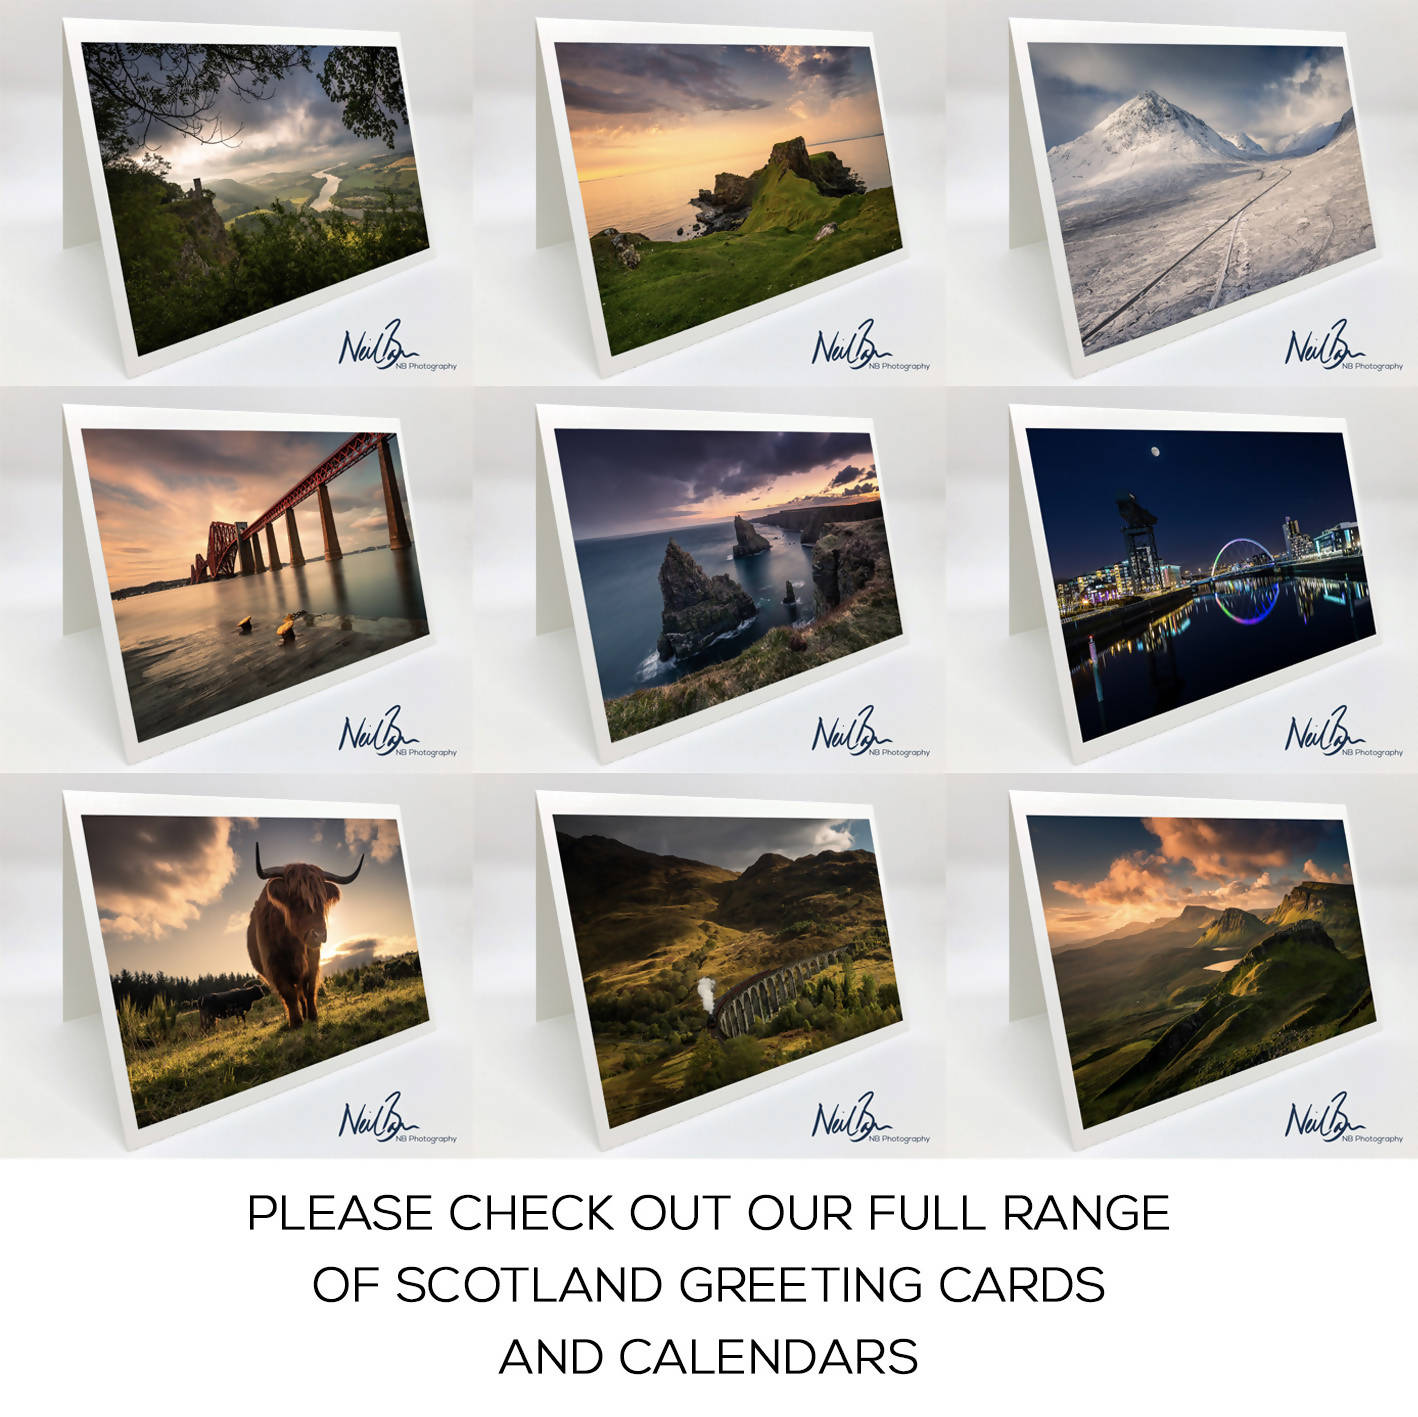 Buachaille Etive Mòr in the Snow - Scotland Greeting Card - Blank Inside